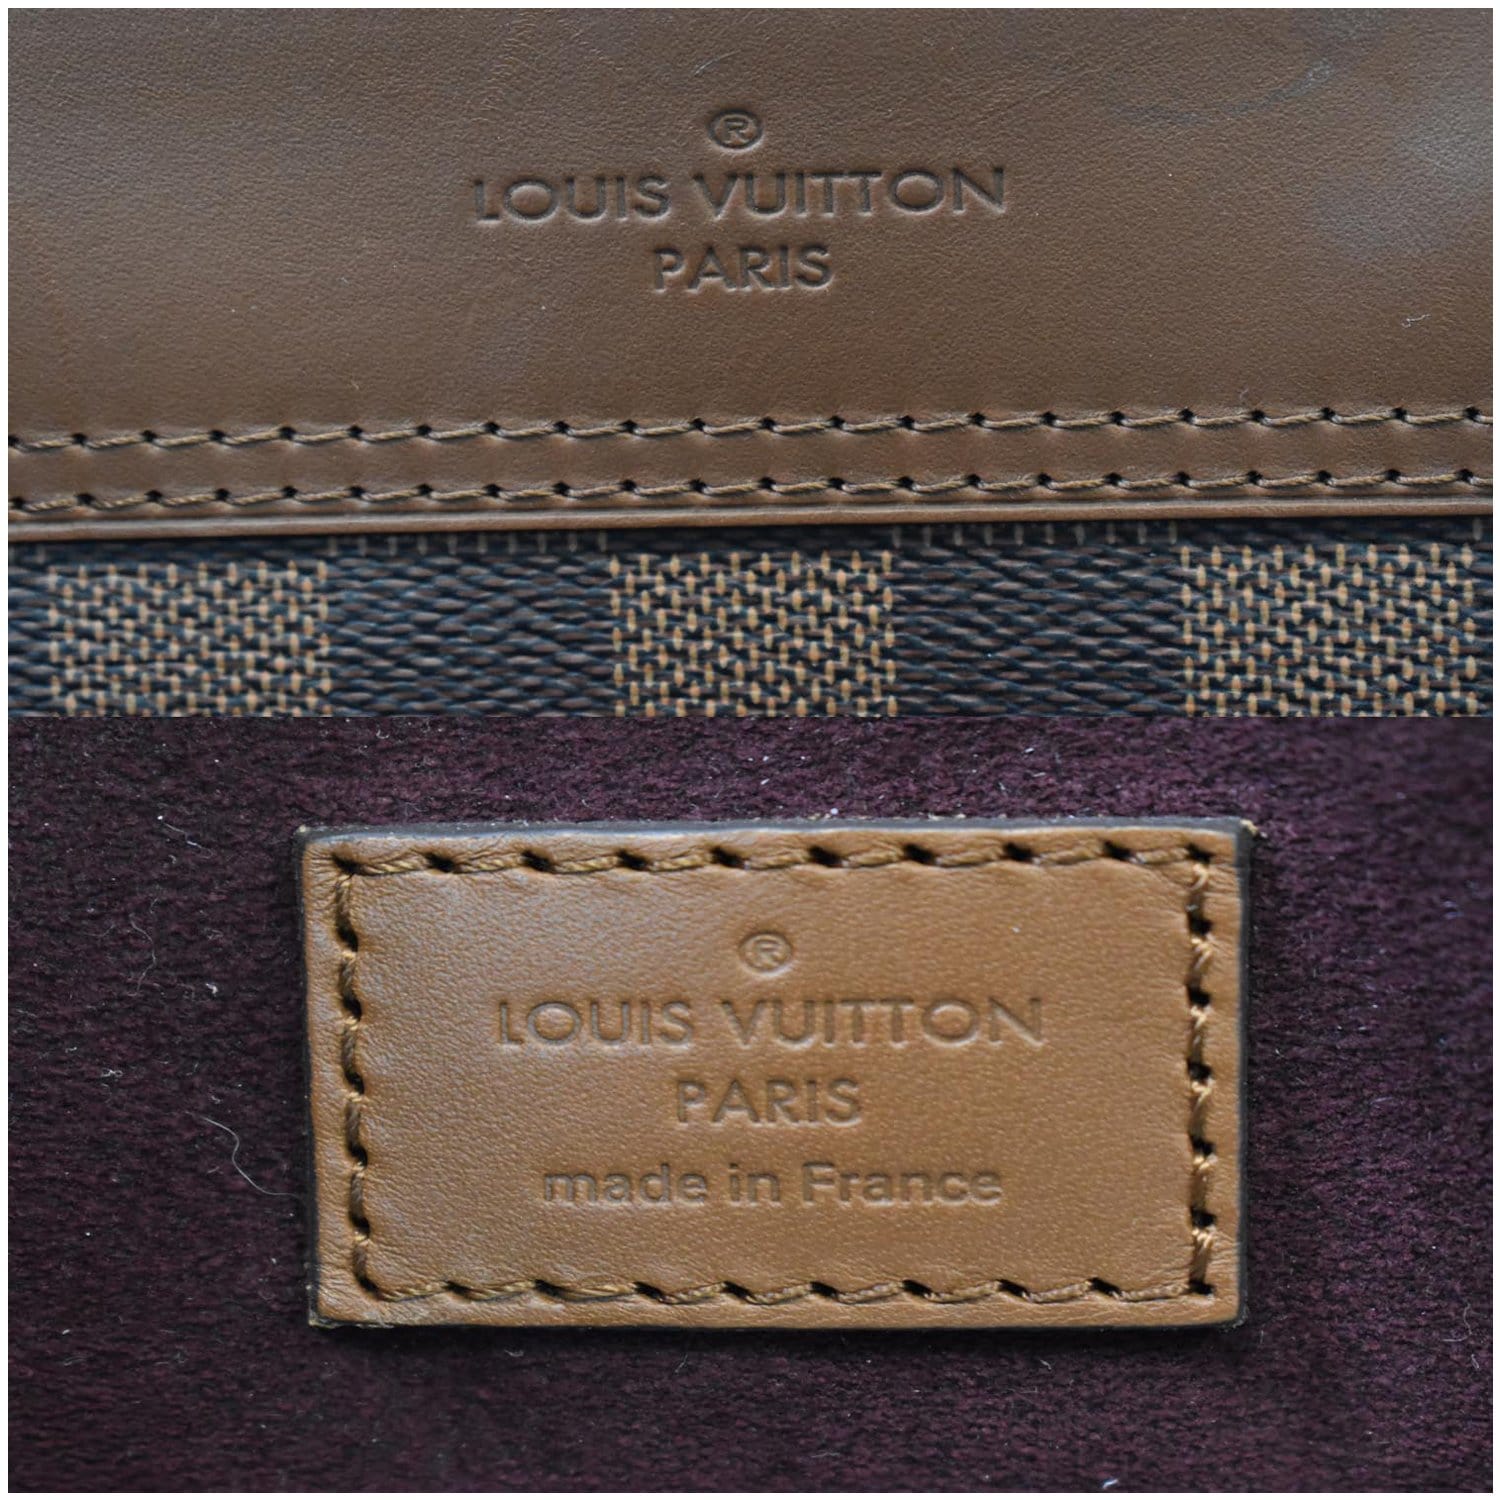 ❤️TOUR - Louis Vuitton Greenwich Damier Ebene Satchel / tote